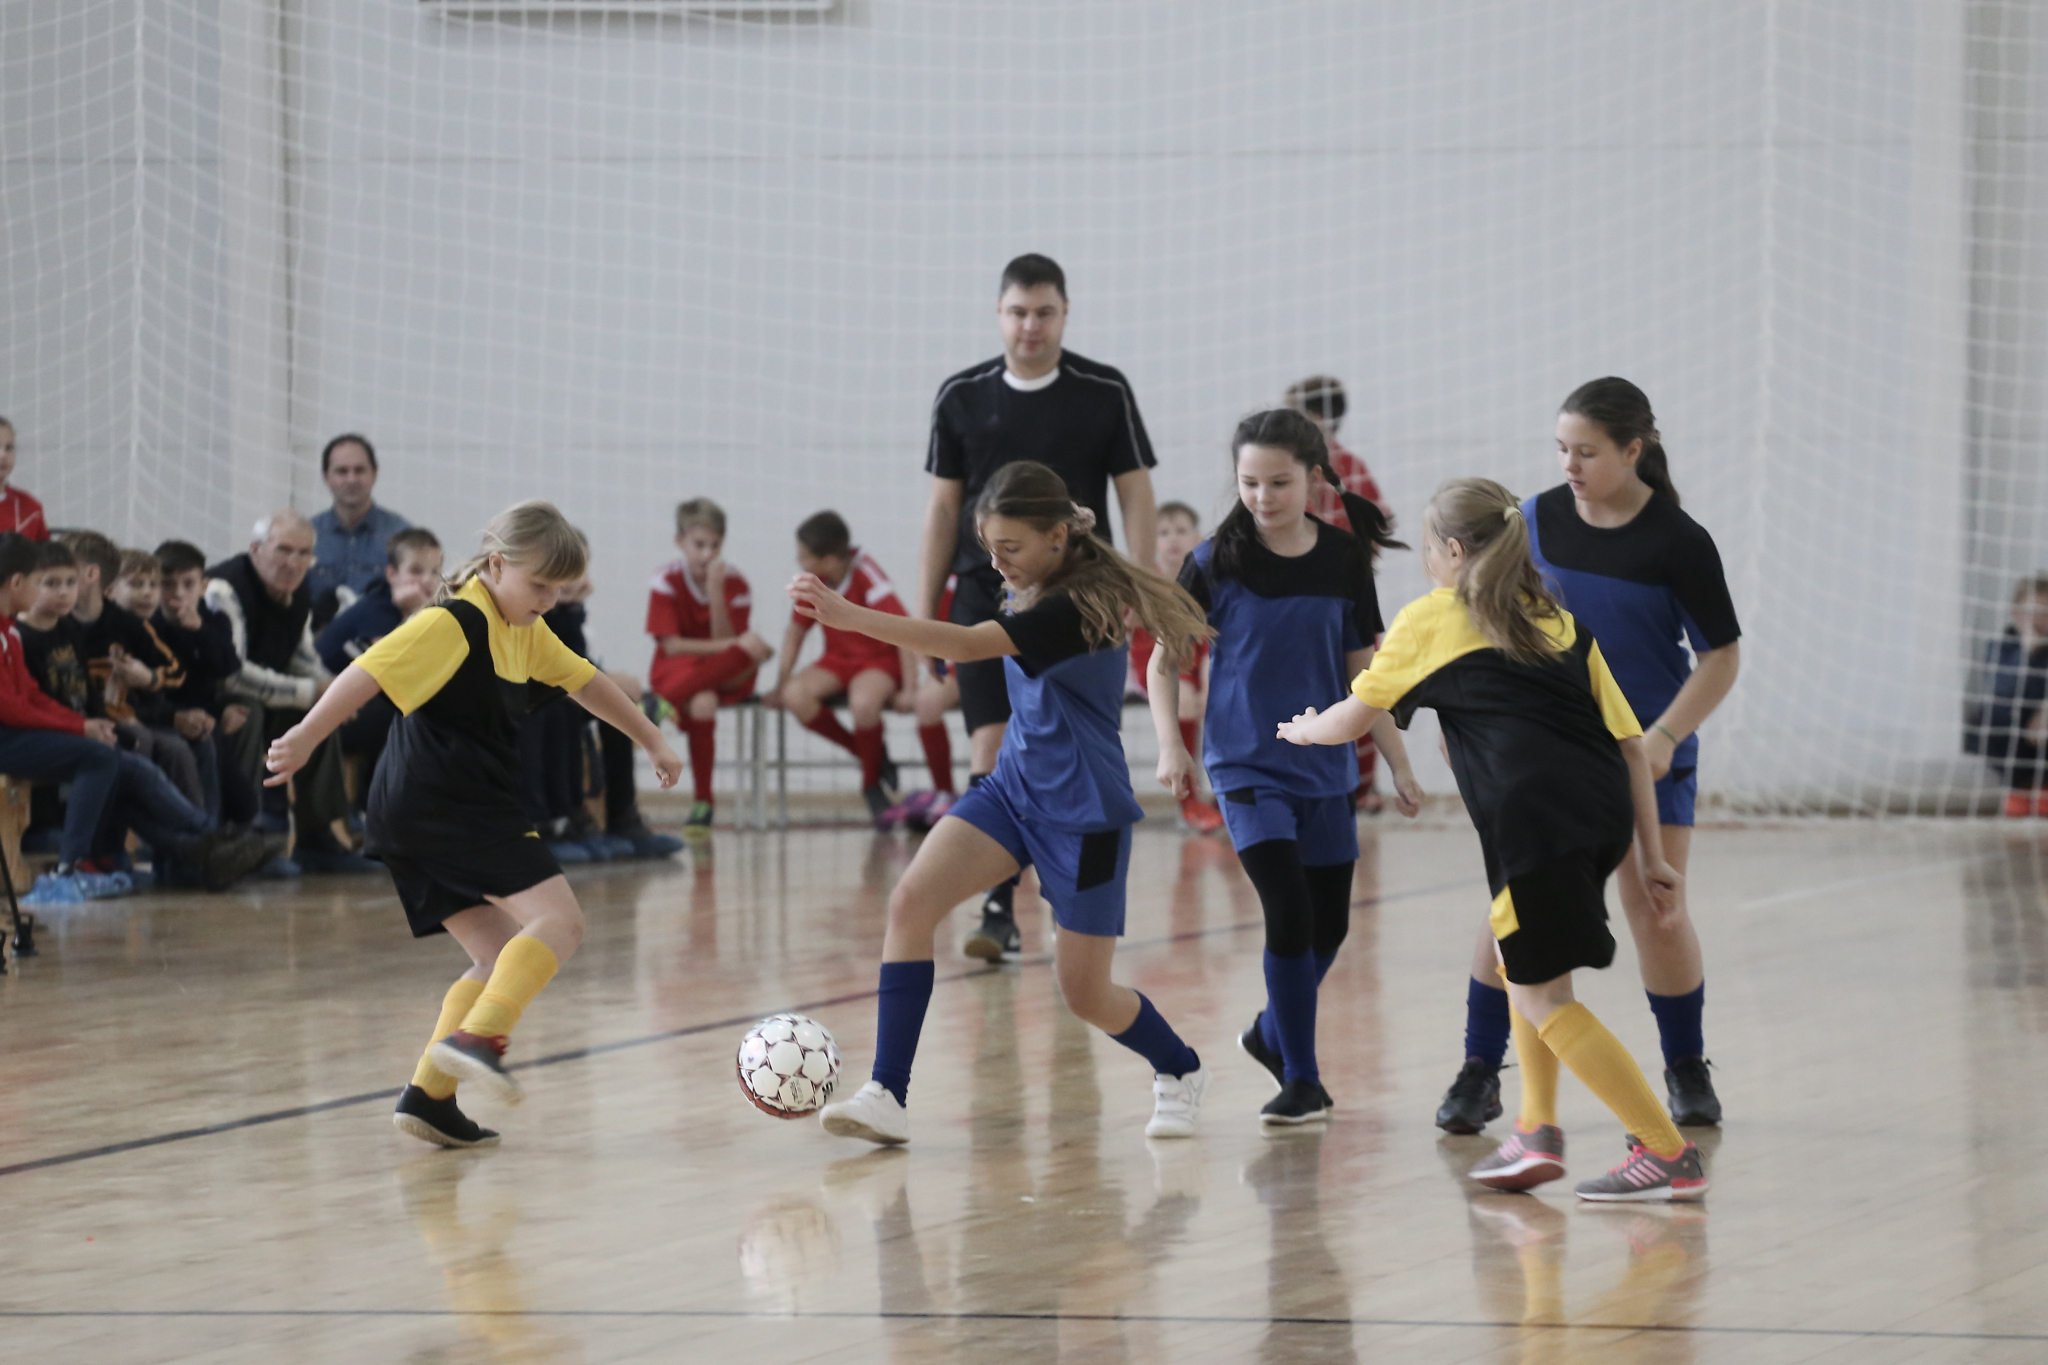 Турнир по мини-футболу среди детей прошел в Нижнем Новгороде (ФОТО)